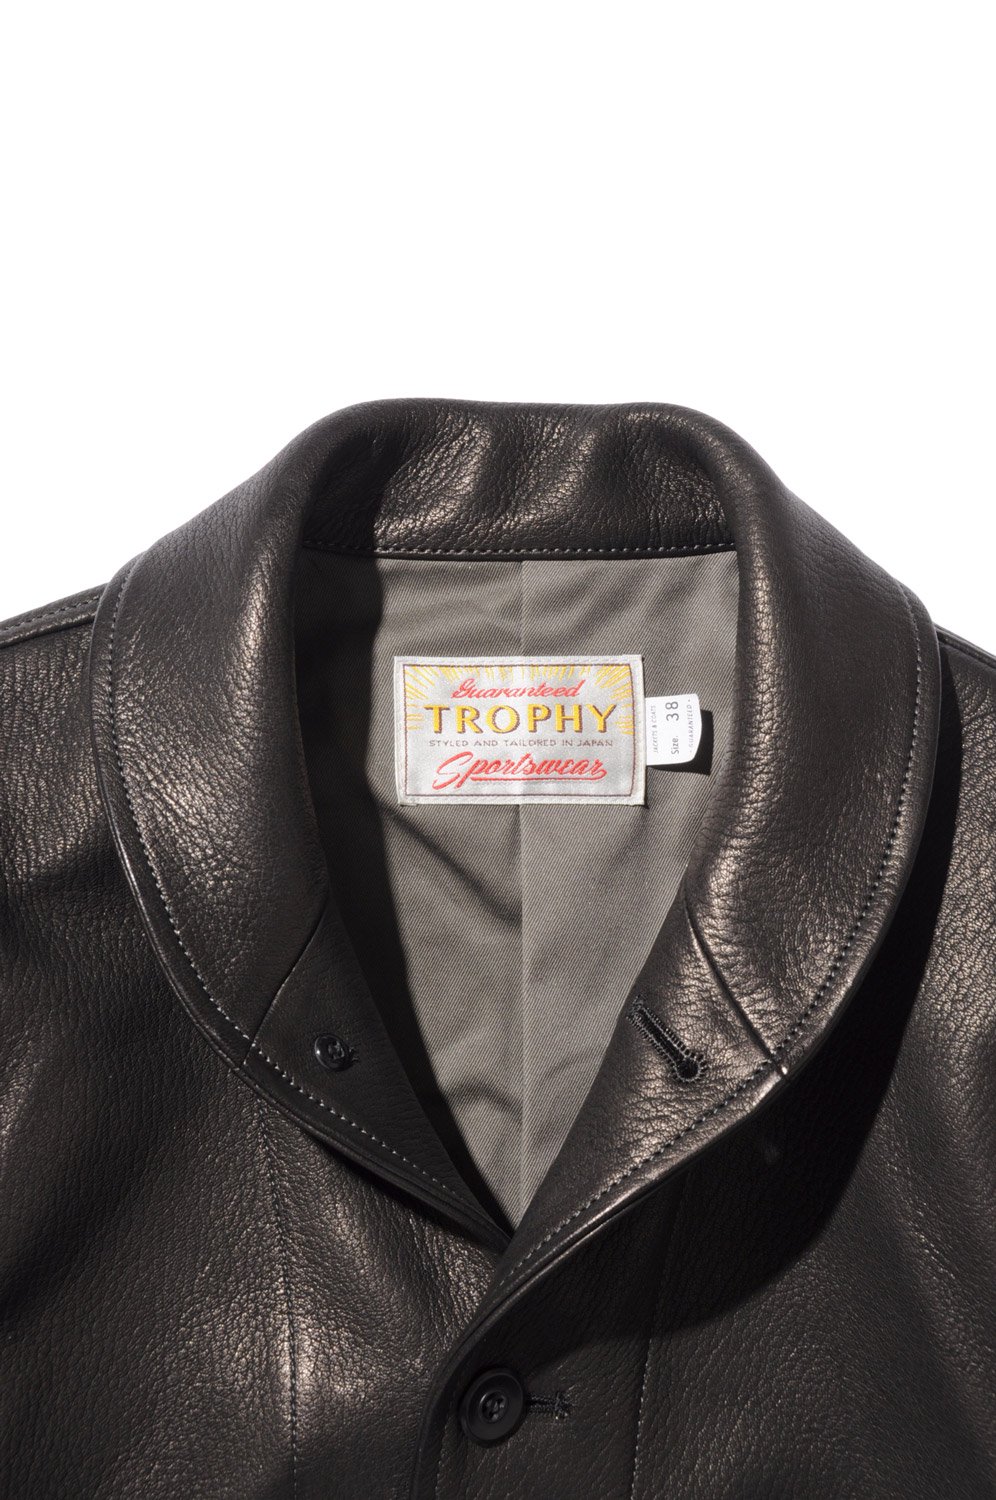 TROPHY CLOTHING(トロフィークロージング) レザージャケット A-1 DEER 